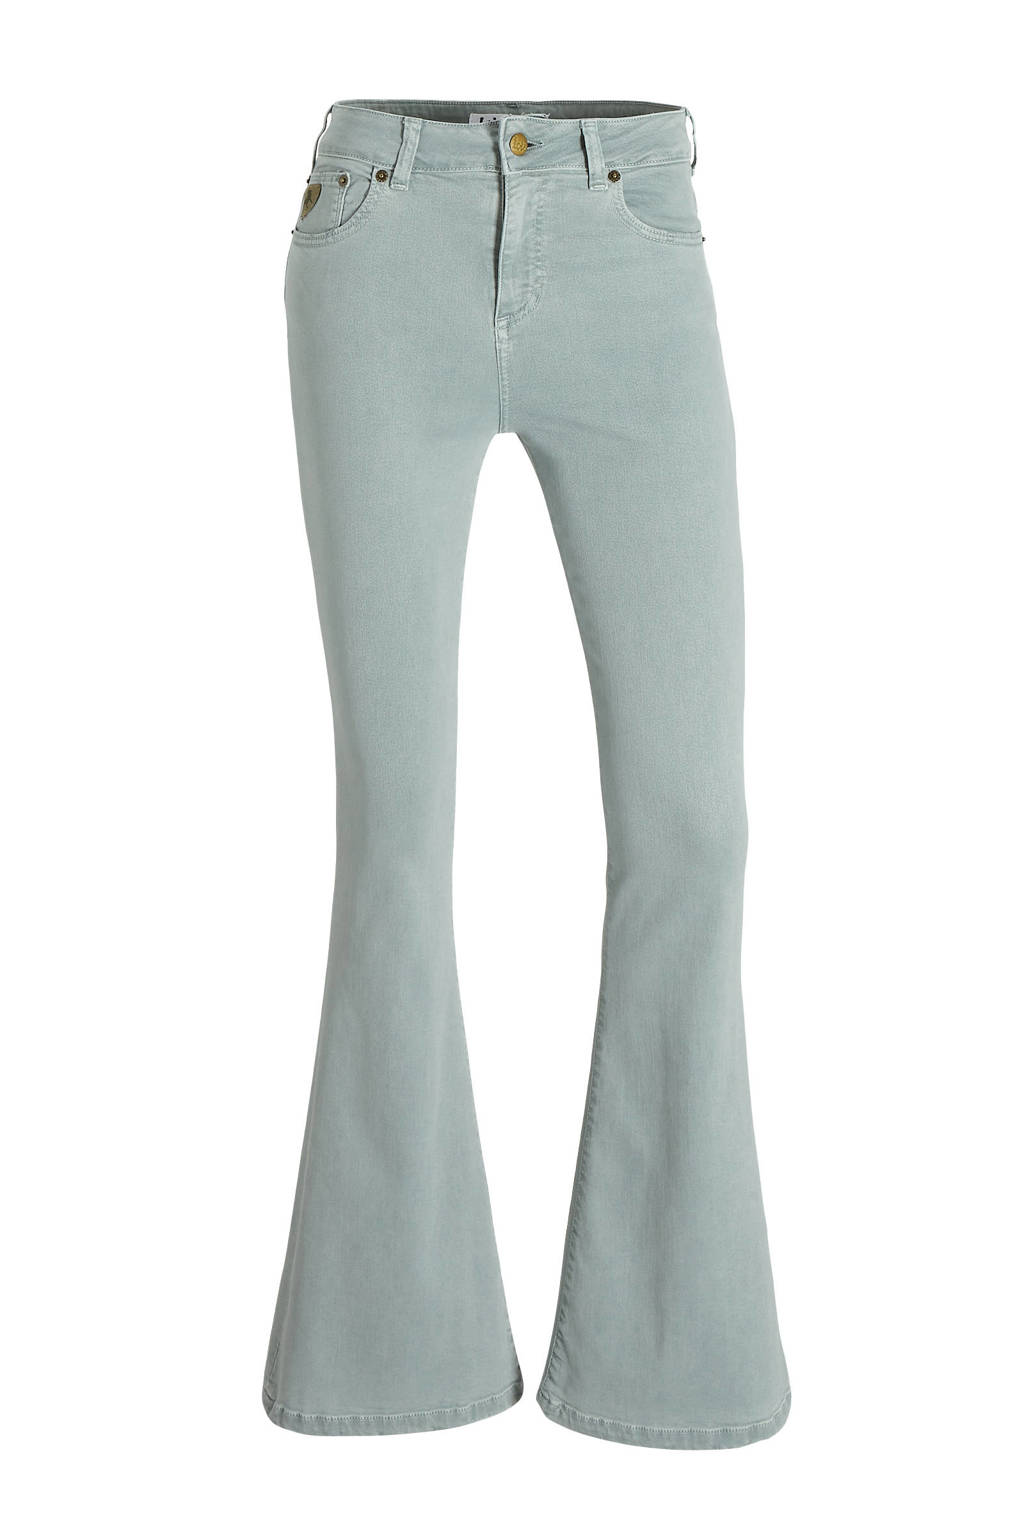 Aan boord Jane Austen Gespierd Lois flared jeans Raval 16 blauw, groen | wehkamp